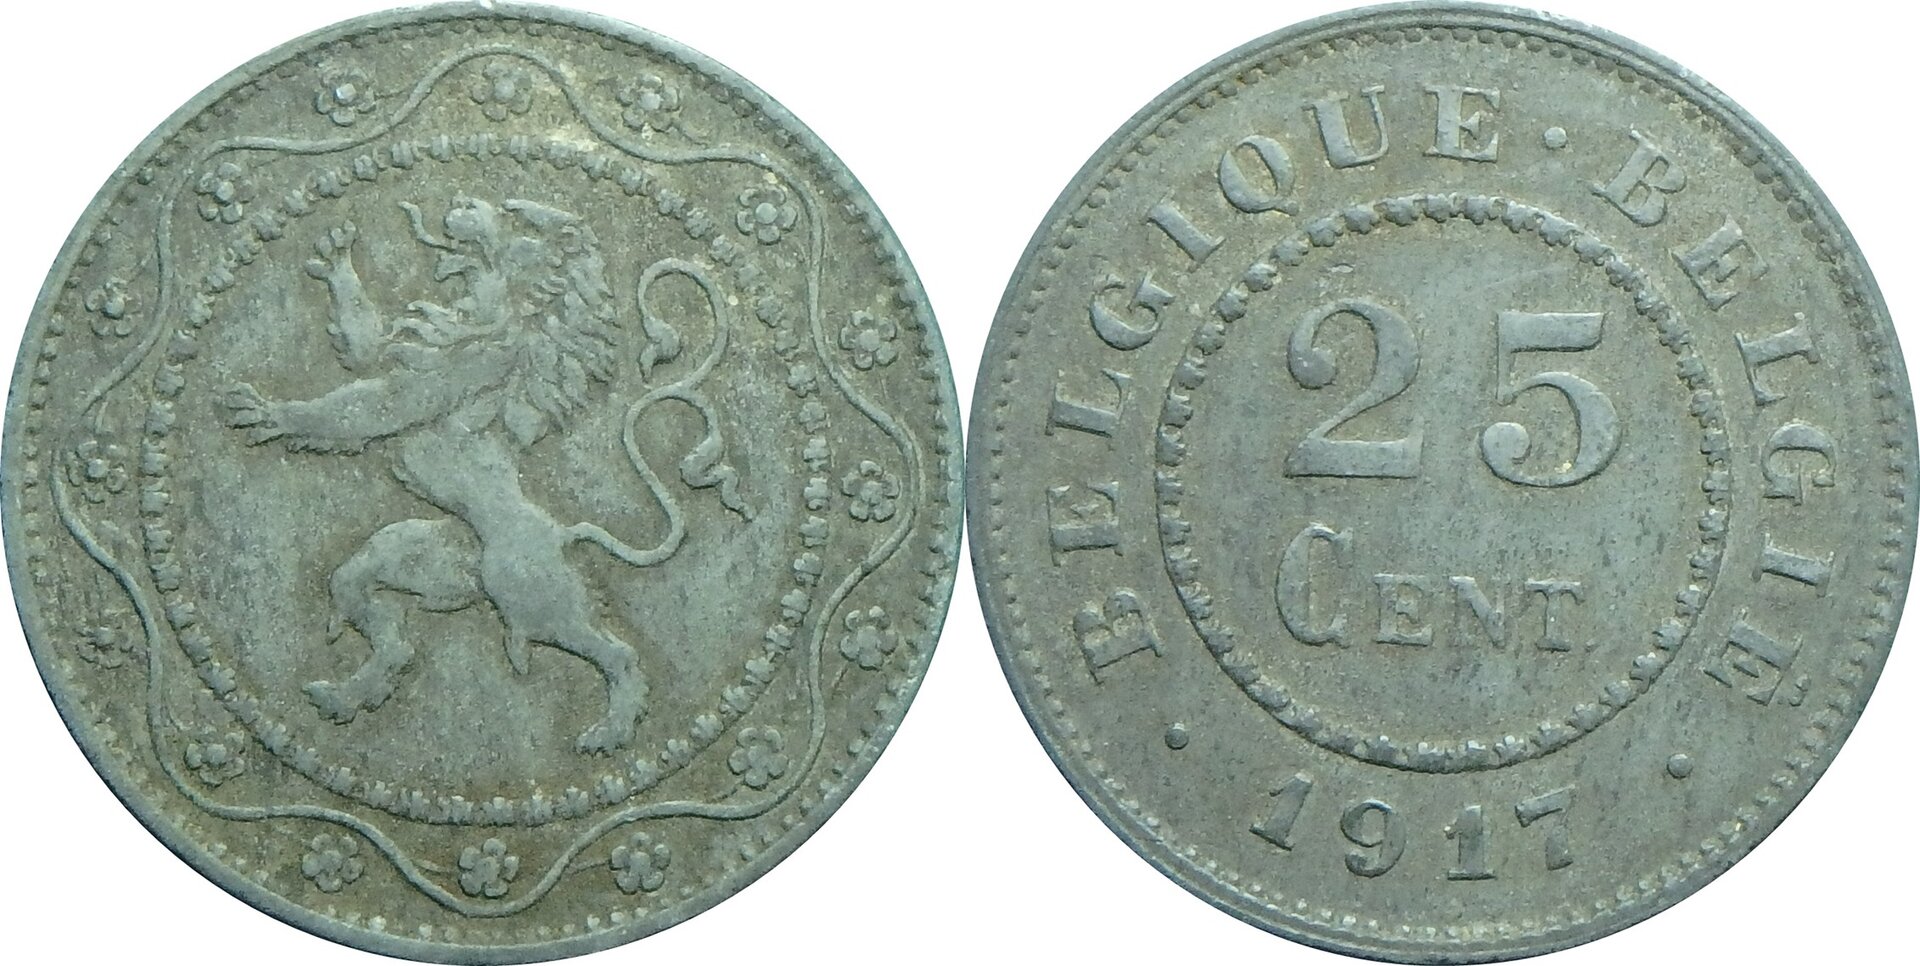 1917 BE 25 c.jpg